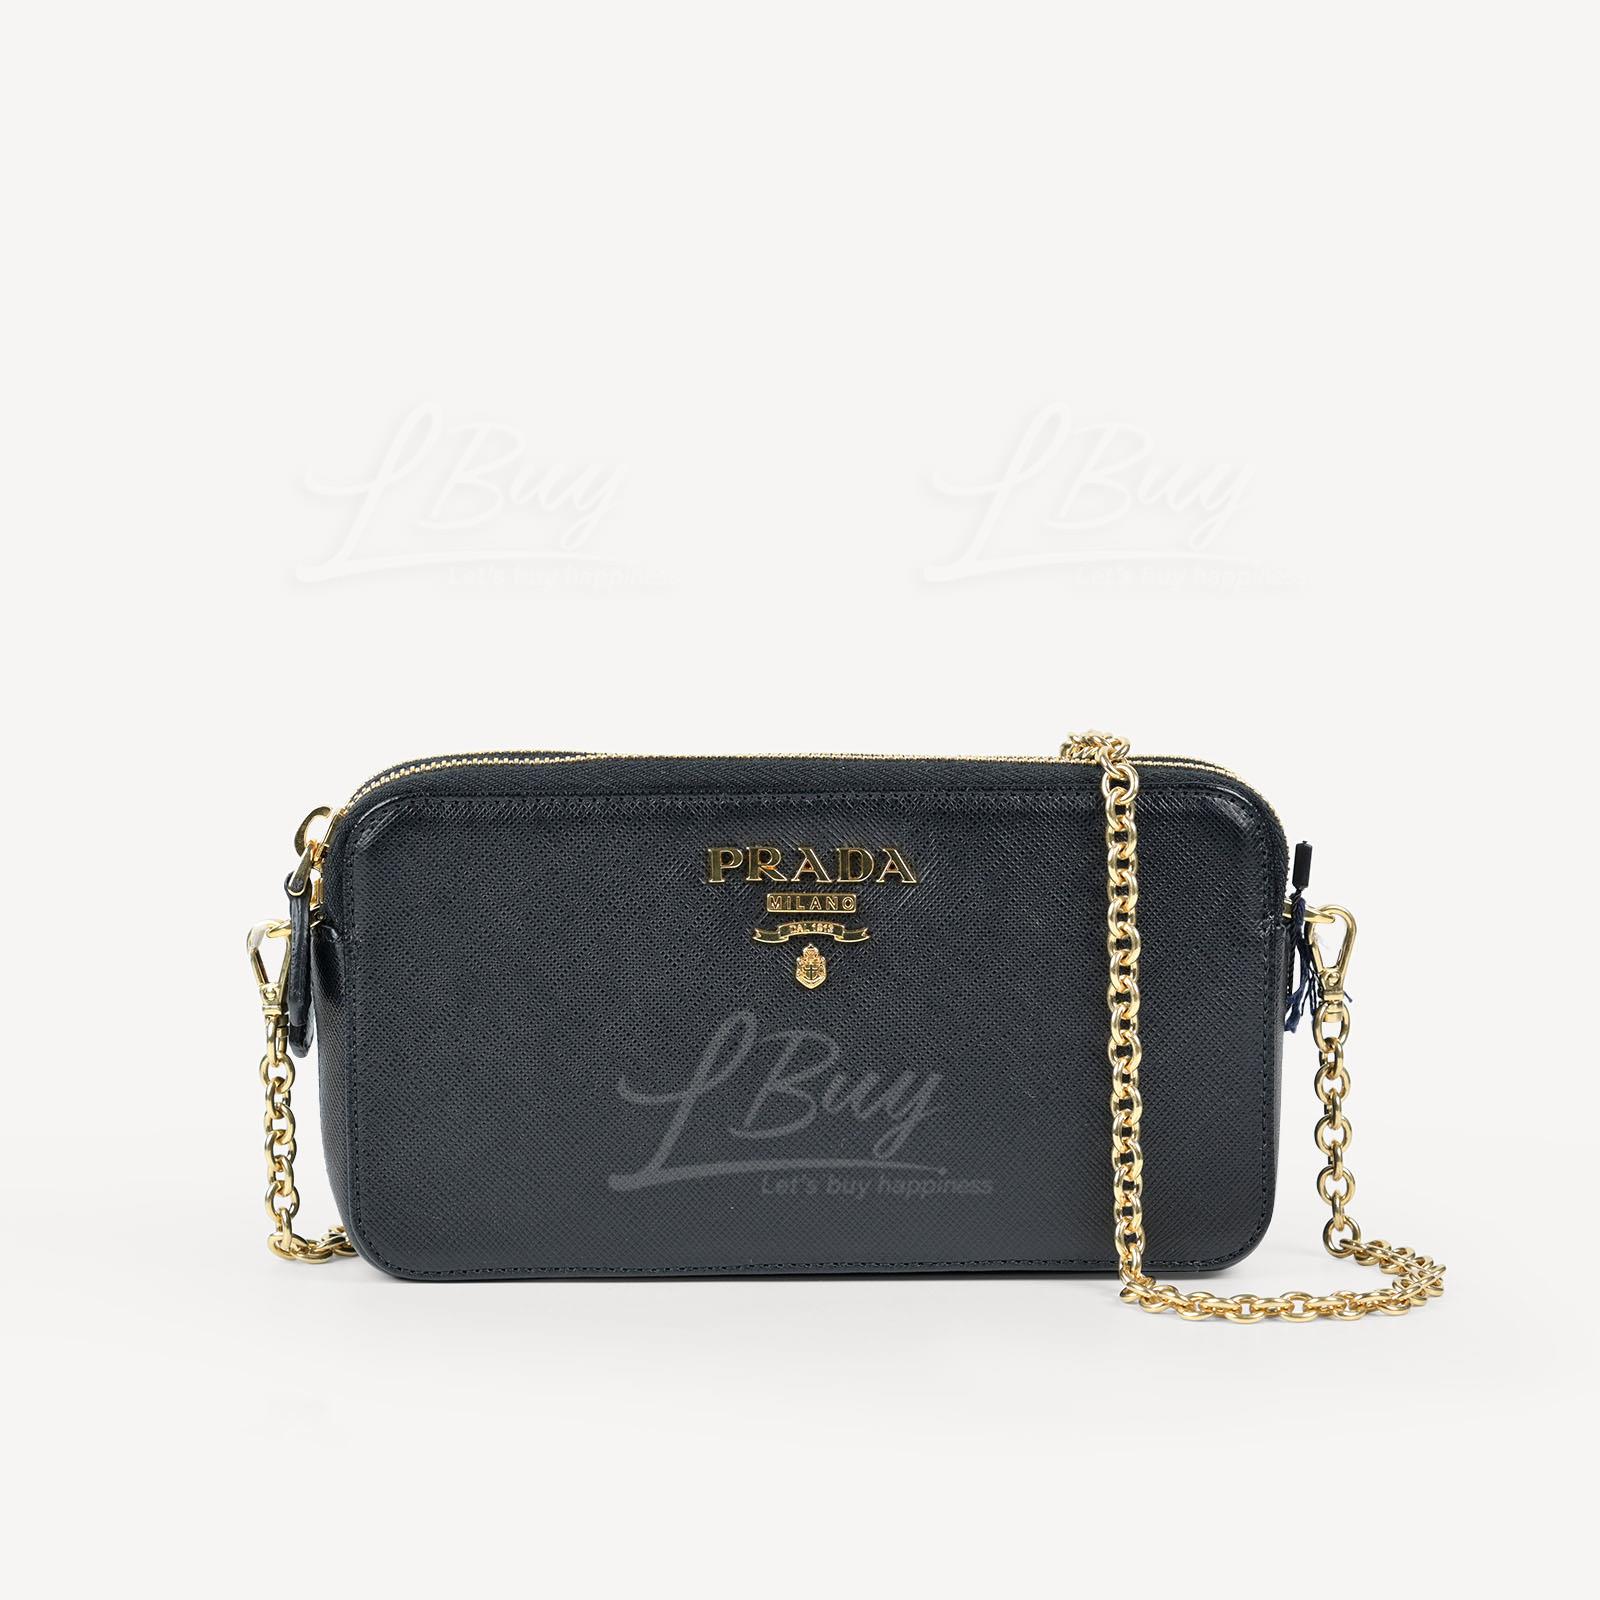 Prada Saffiano Leather Double Zipper Black Shoulder Bag Crossbody Bag